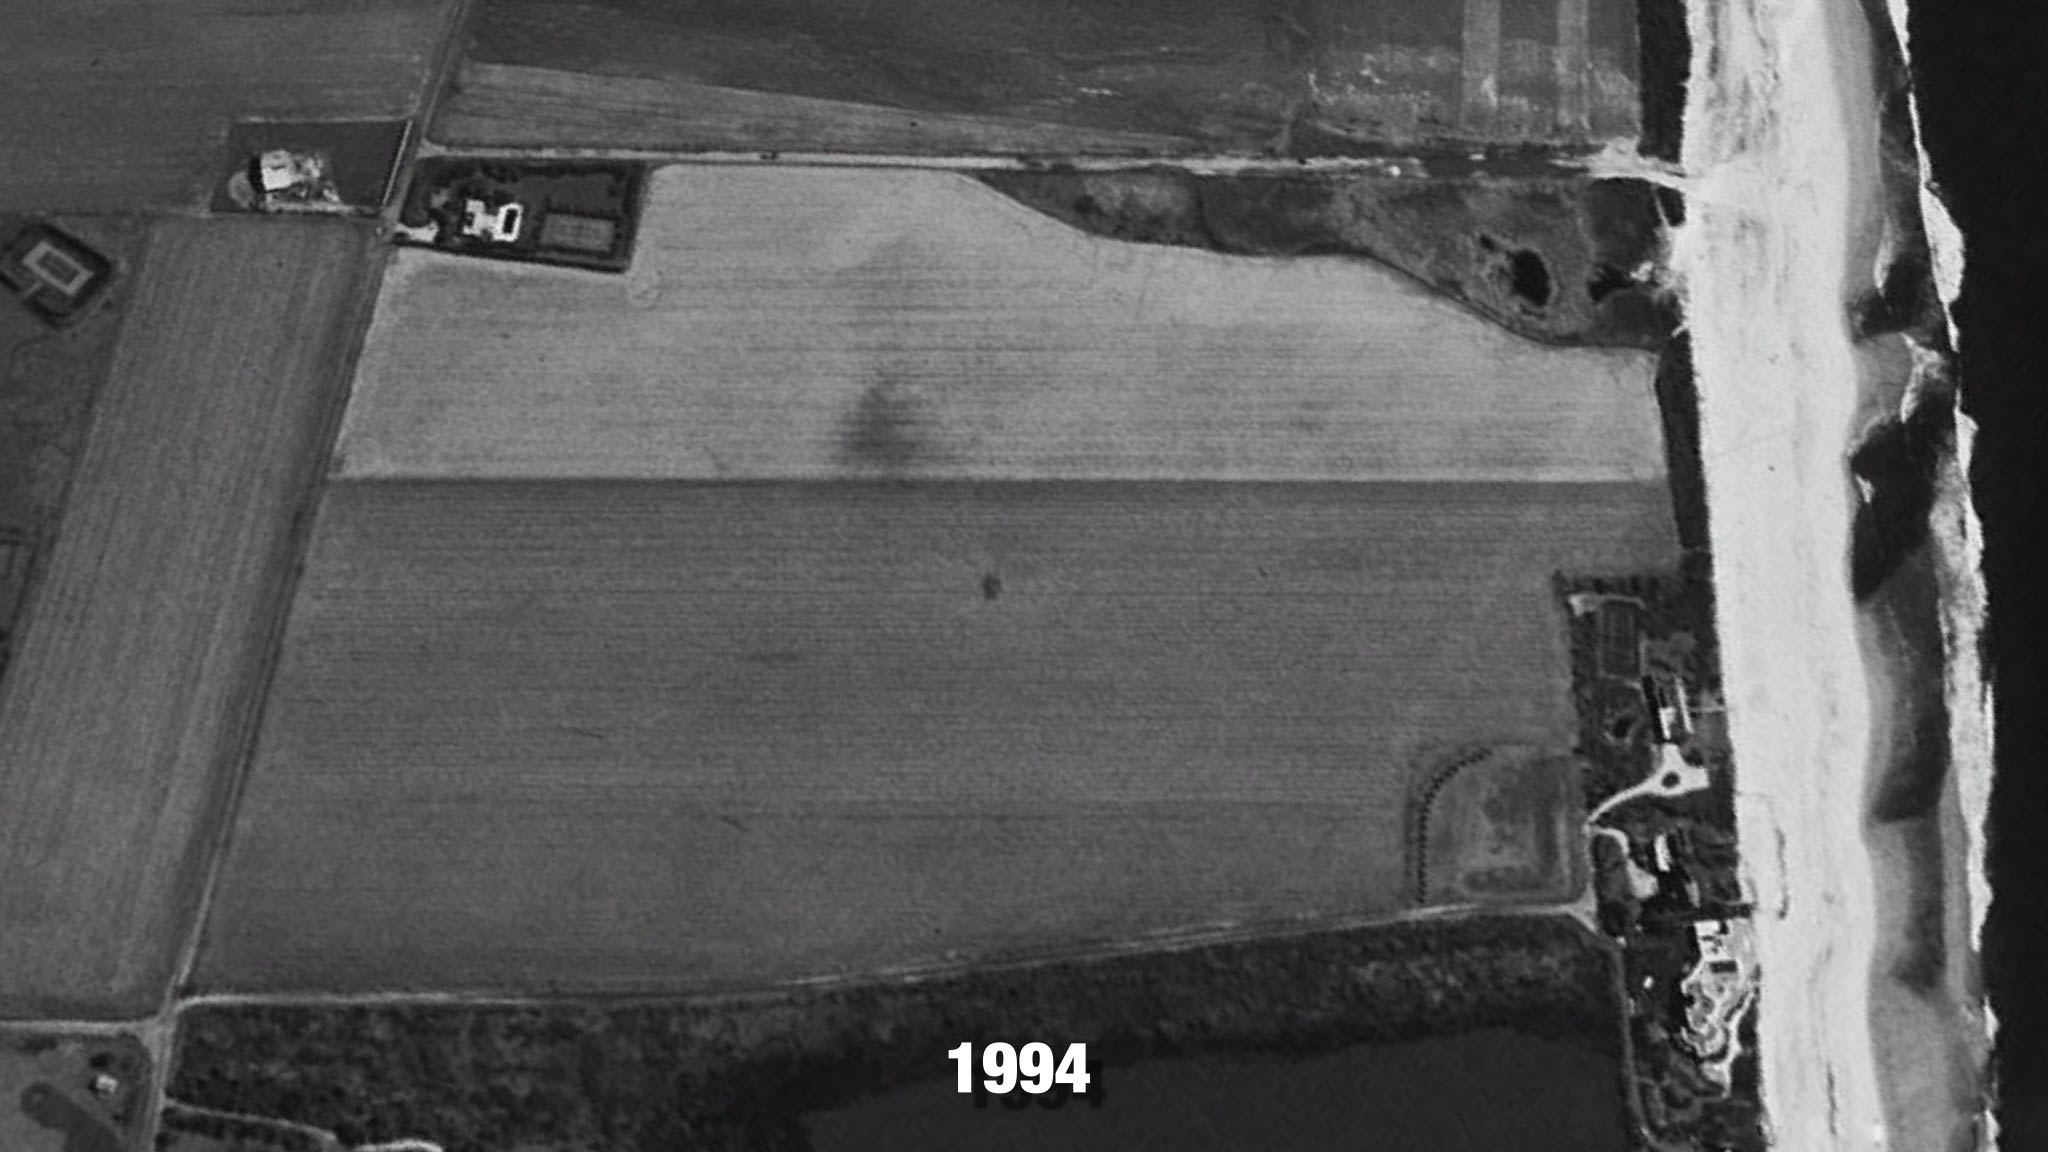 Hamptons, NY satellite image from 1994